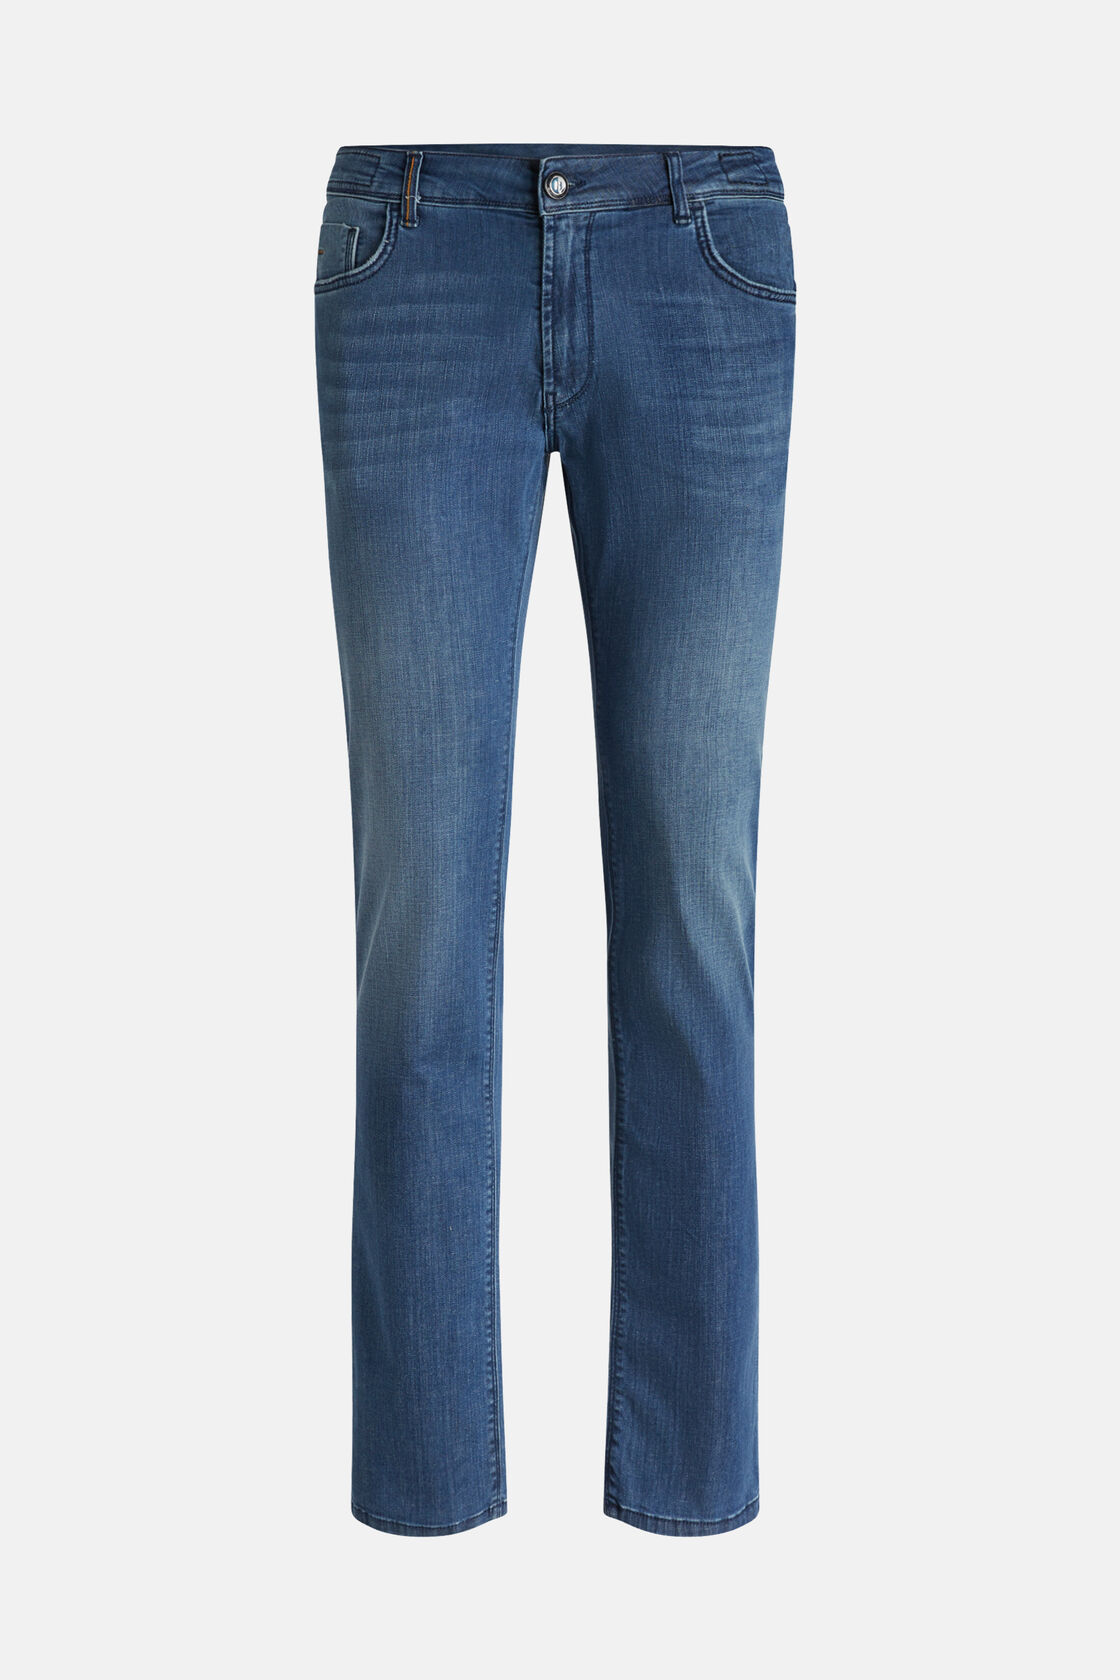 Medium blue stretch denim jeans, Indigo, hi-res